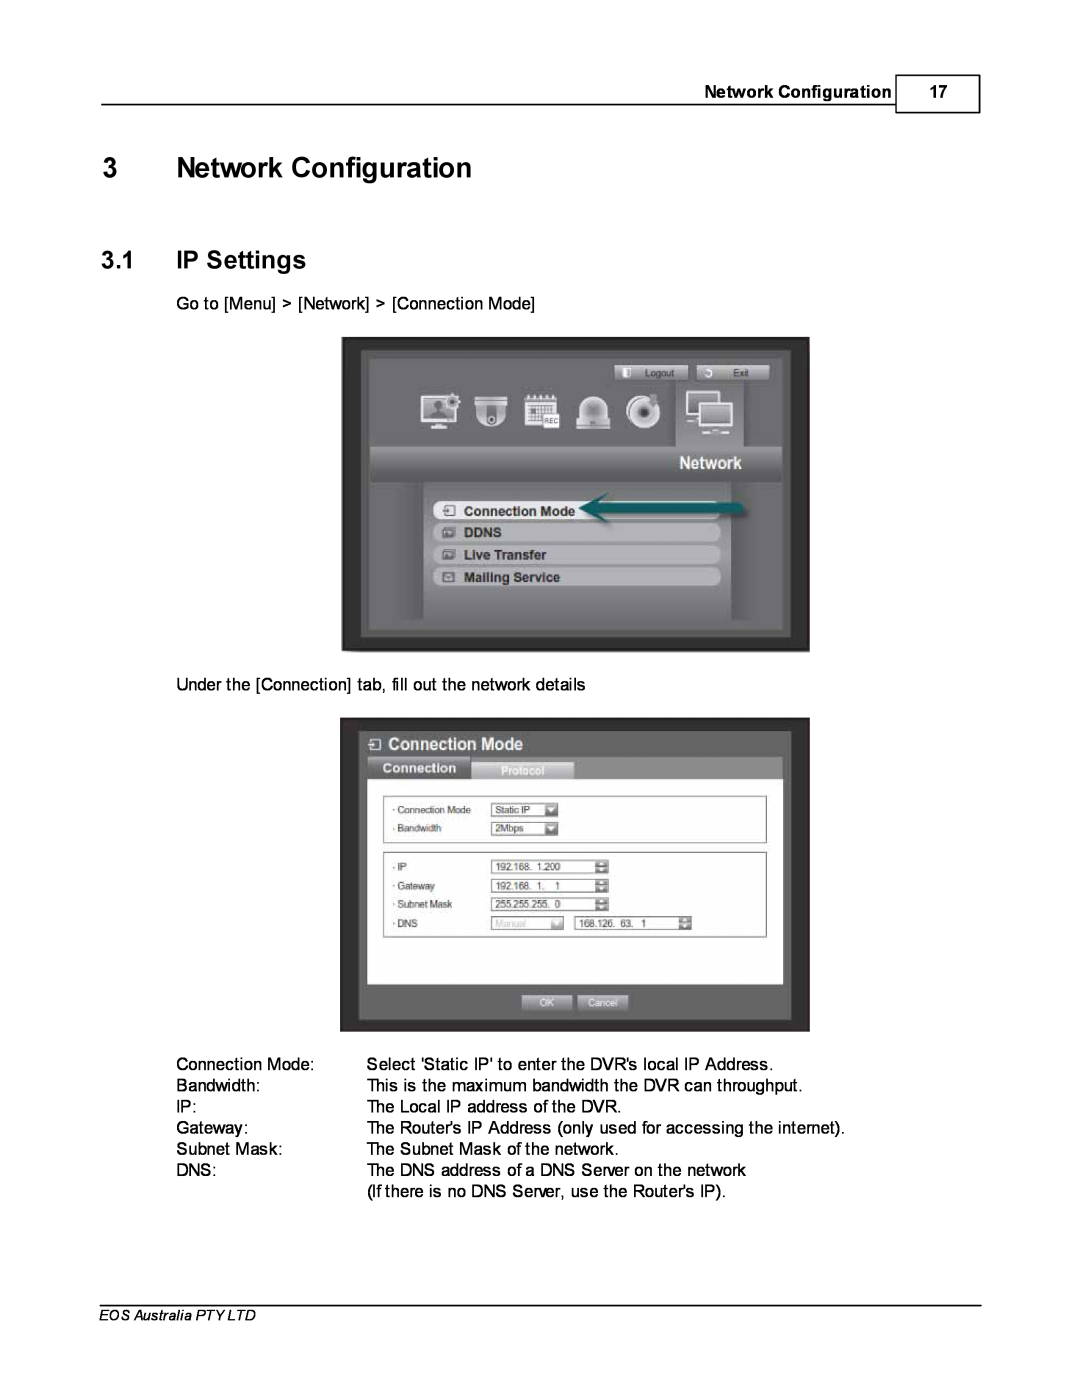 Samsung SDR4200 manual 3Network Configuration, 3.1IP Settings 